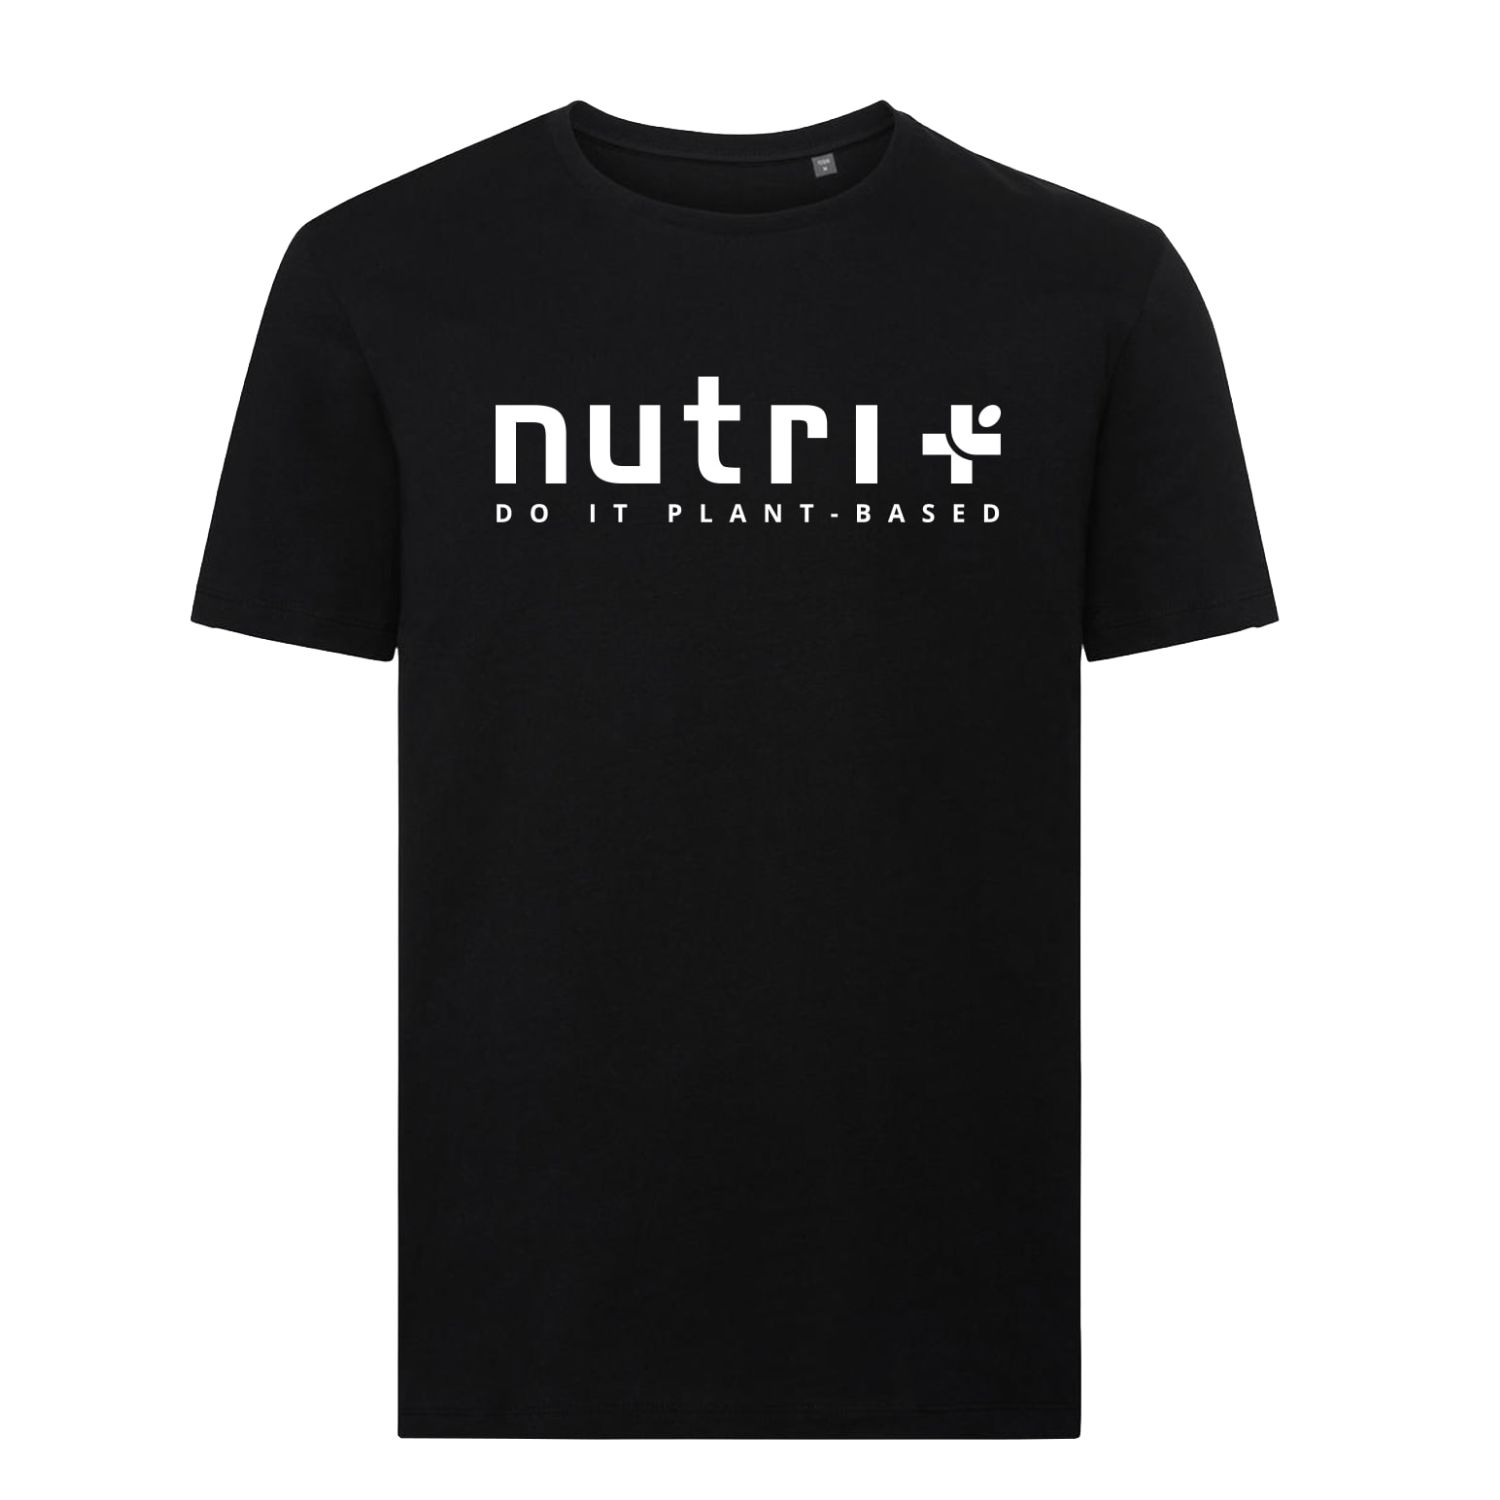 Team nutri+ Männer T-Shirt